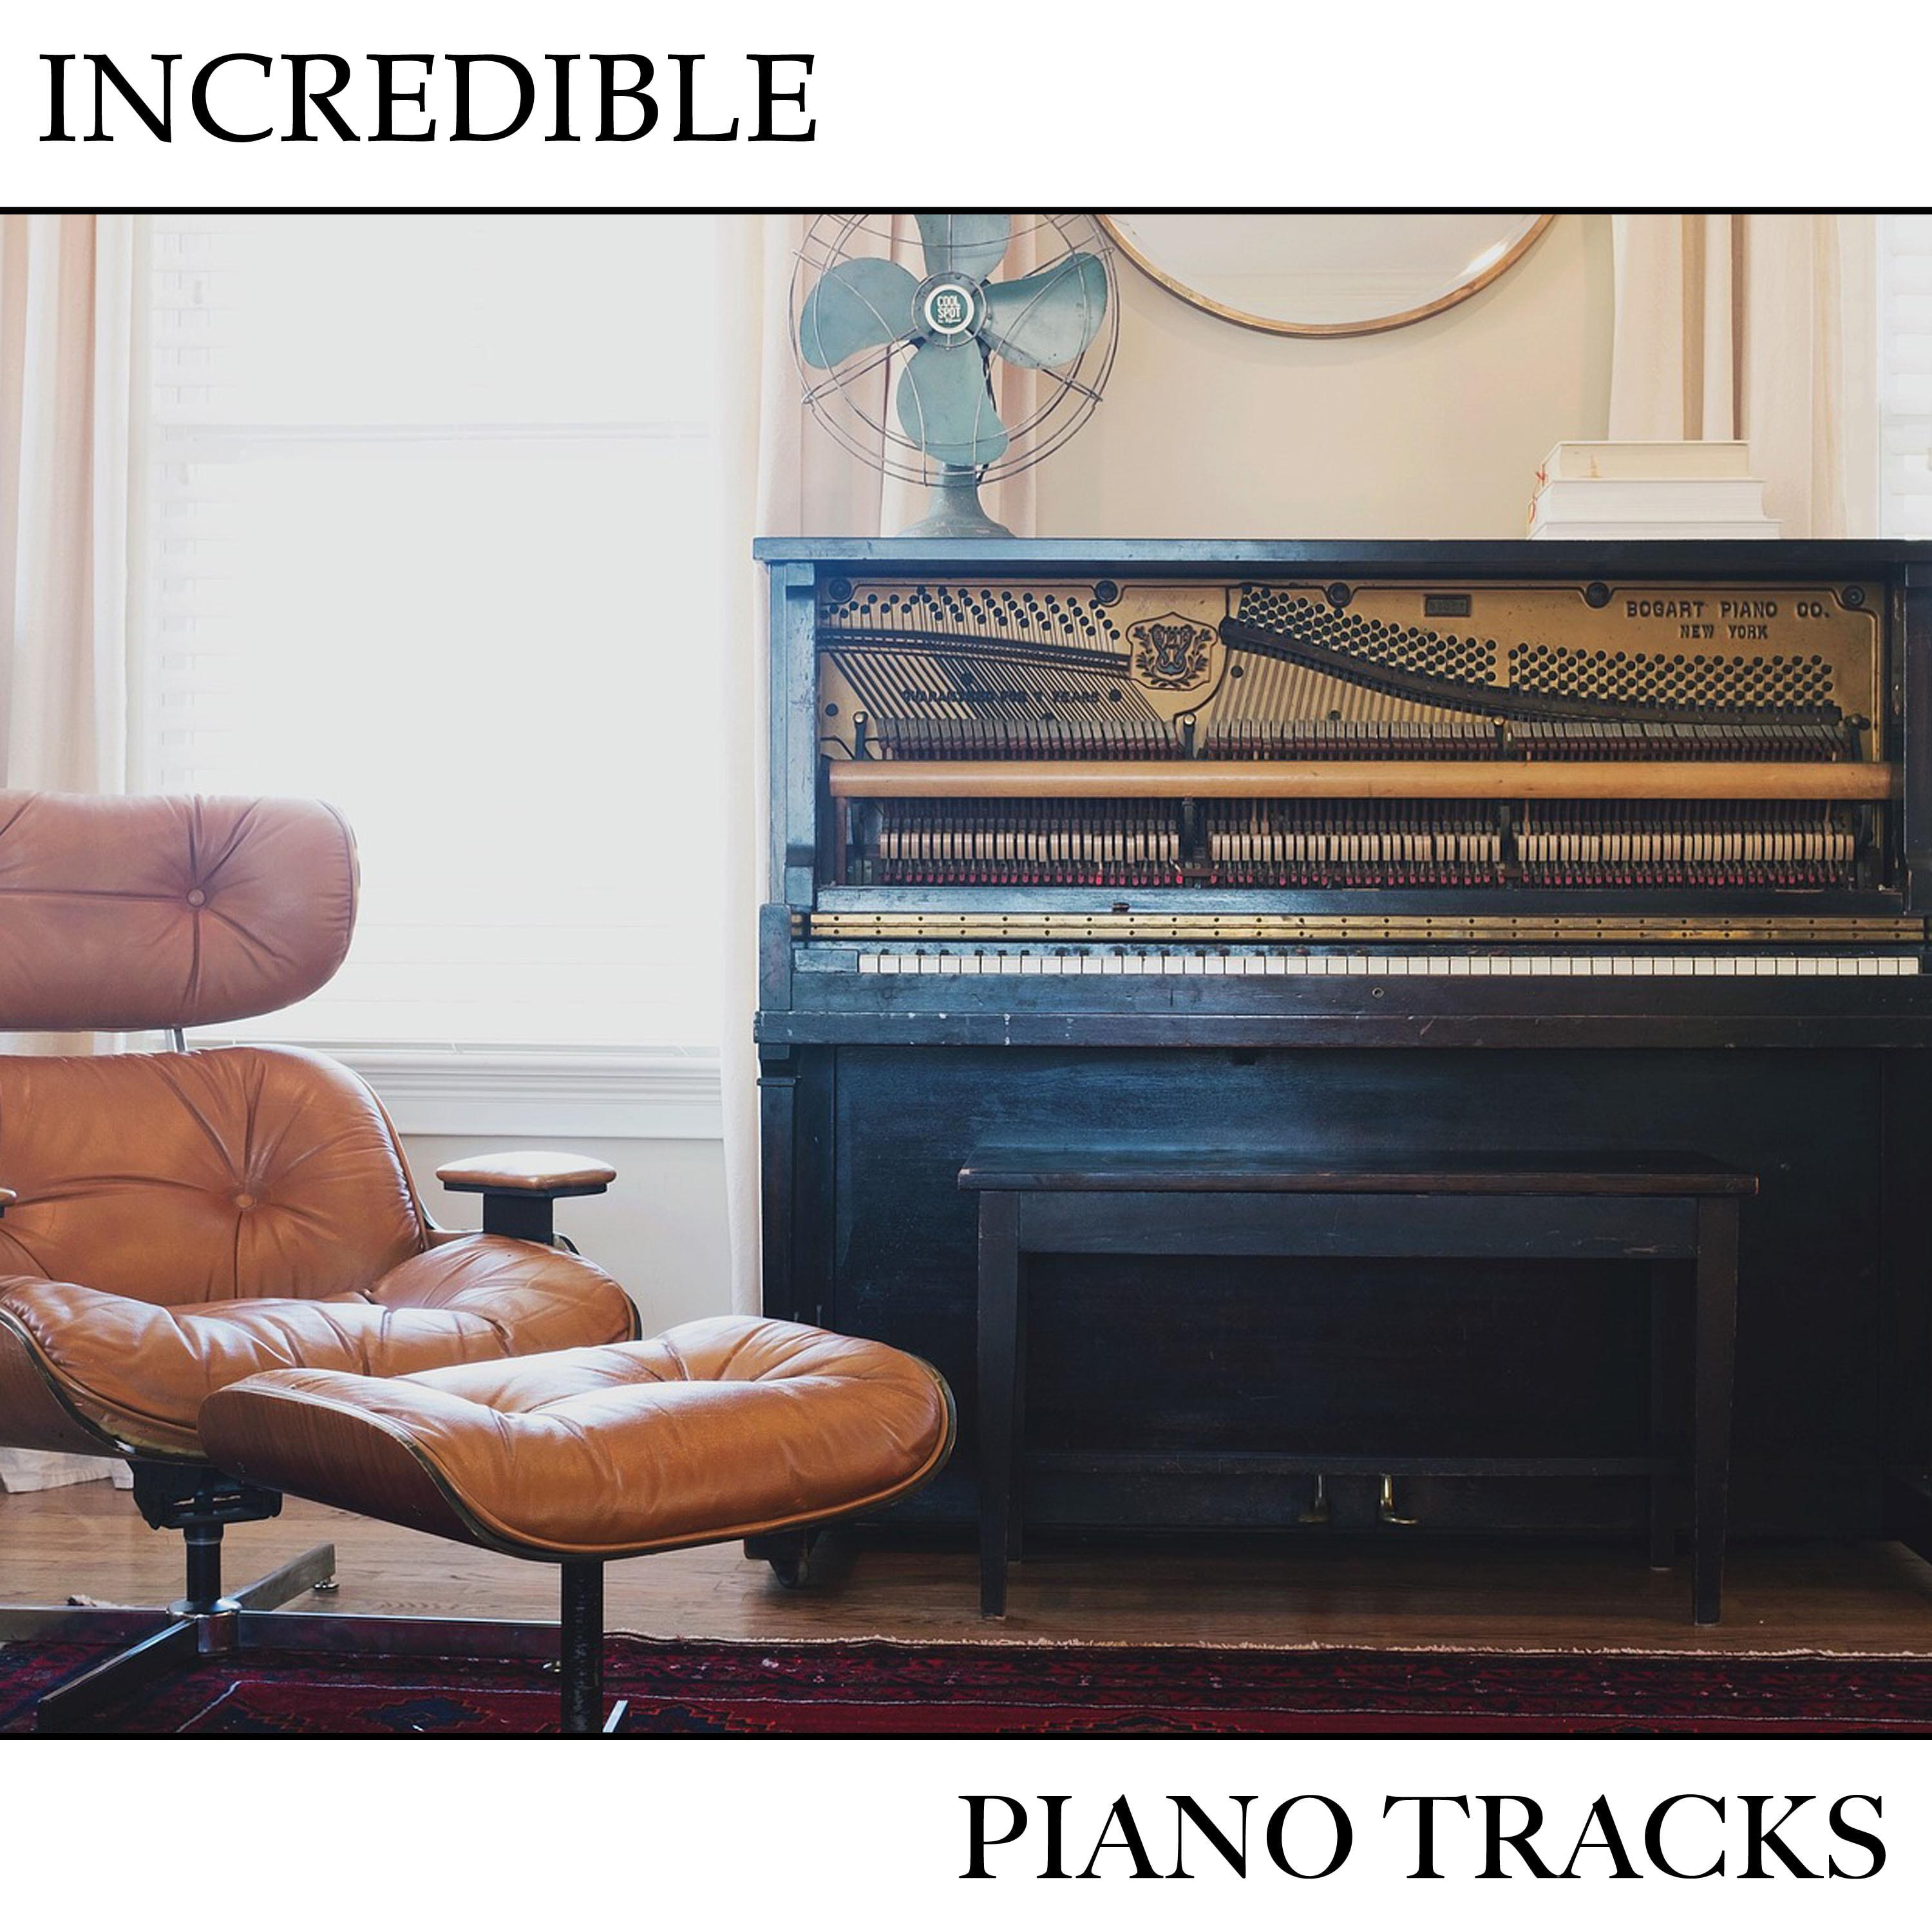 #7 Incredible Piano Tracks